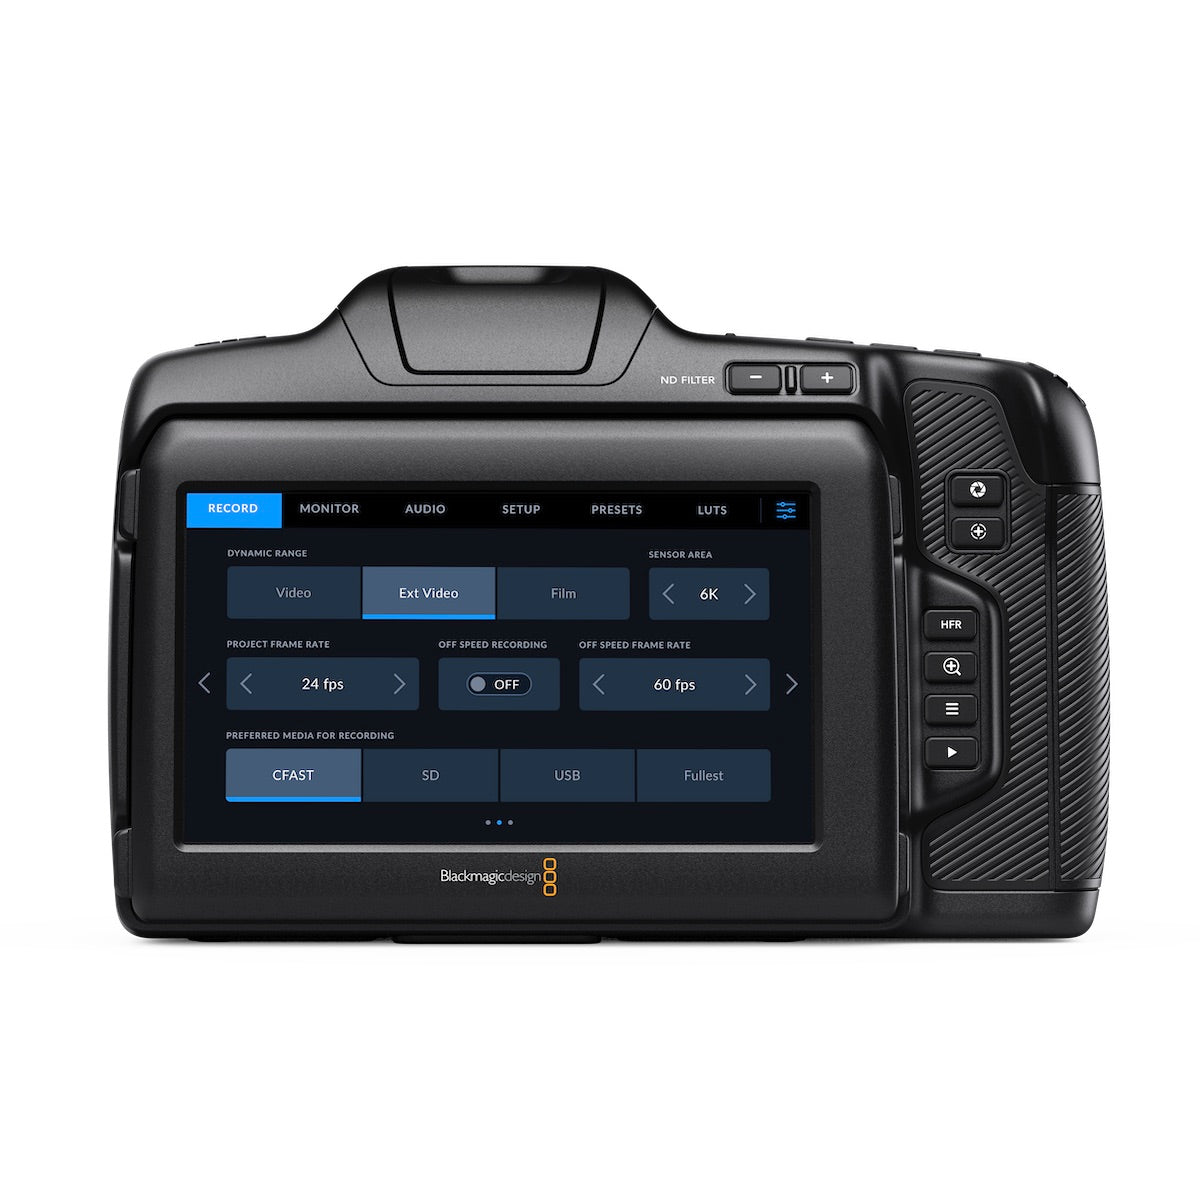 Blackmagic Pocket Cinema Camera 6K Pro with Super 35 HDR Sensor, rear display